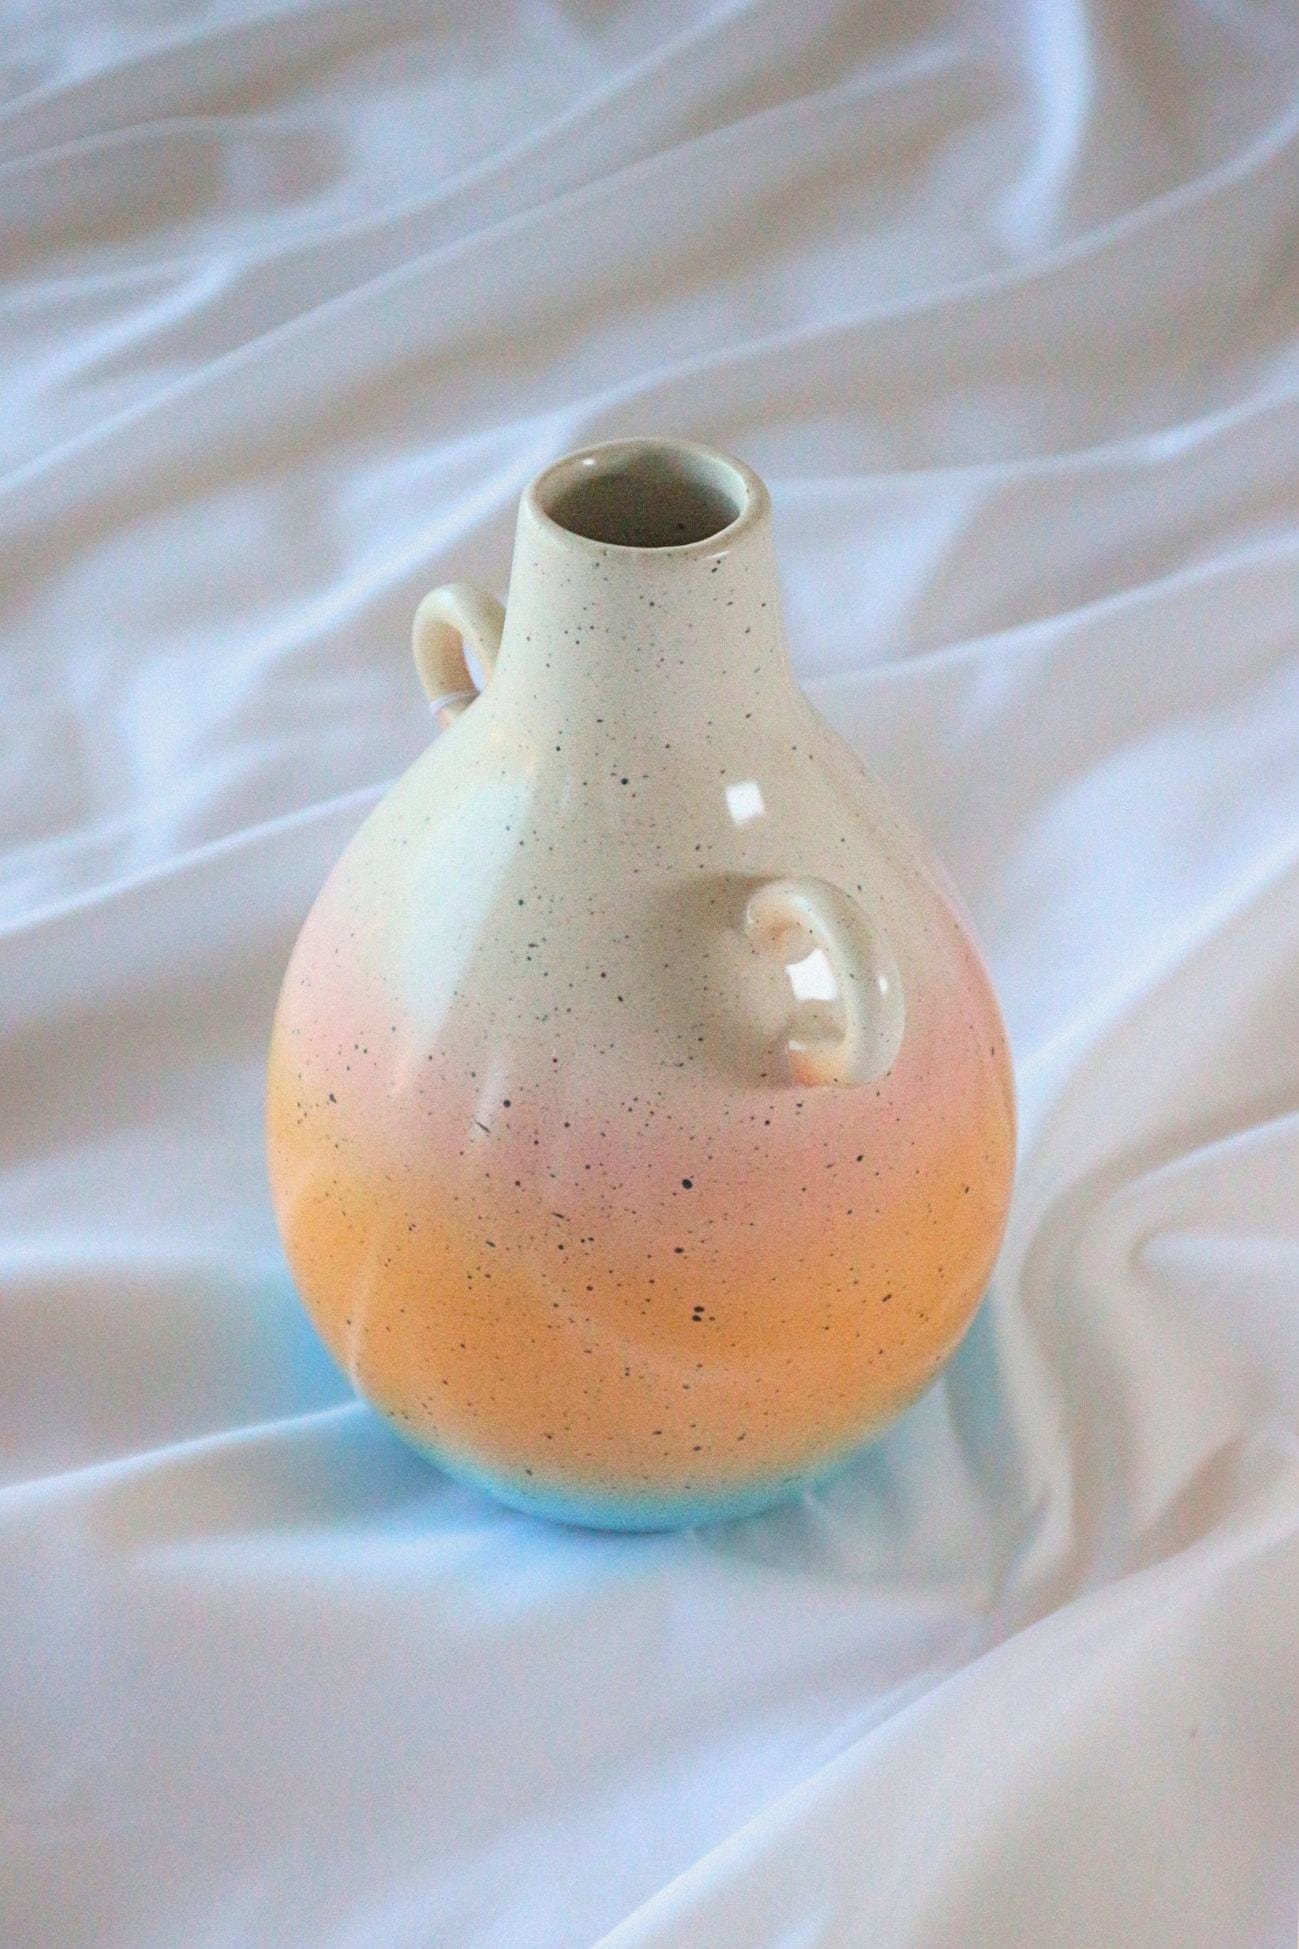 Item International Jace Jace - Vaso in ceramica con sfumature di colore | Item International